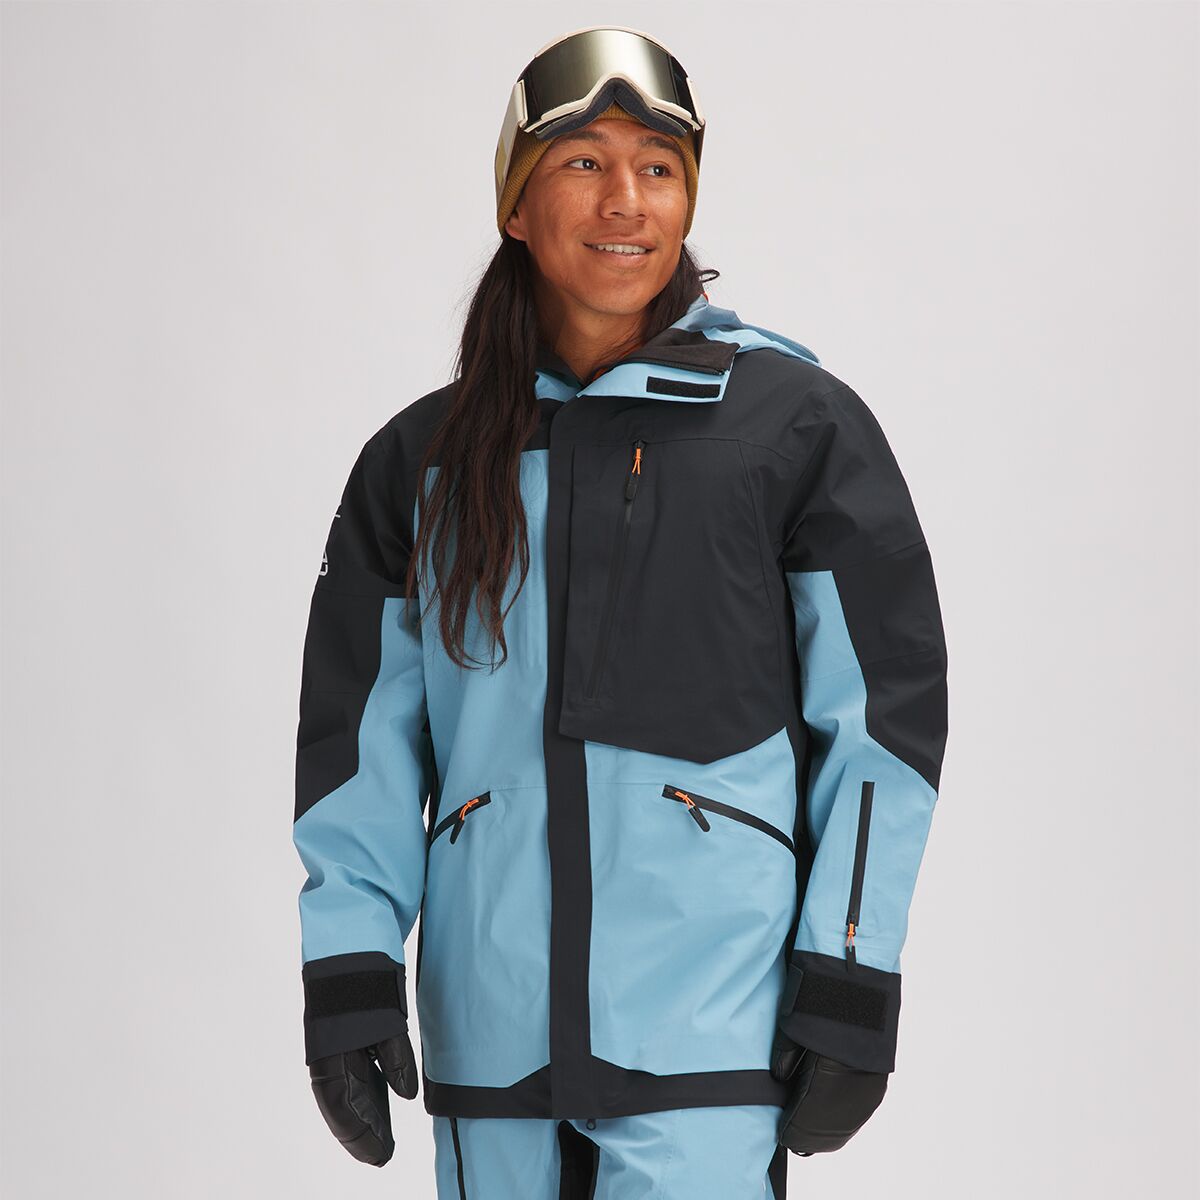 snowboard jacket online shop